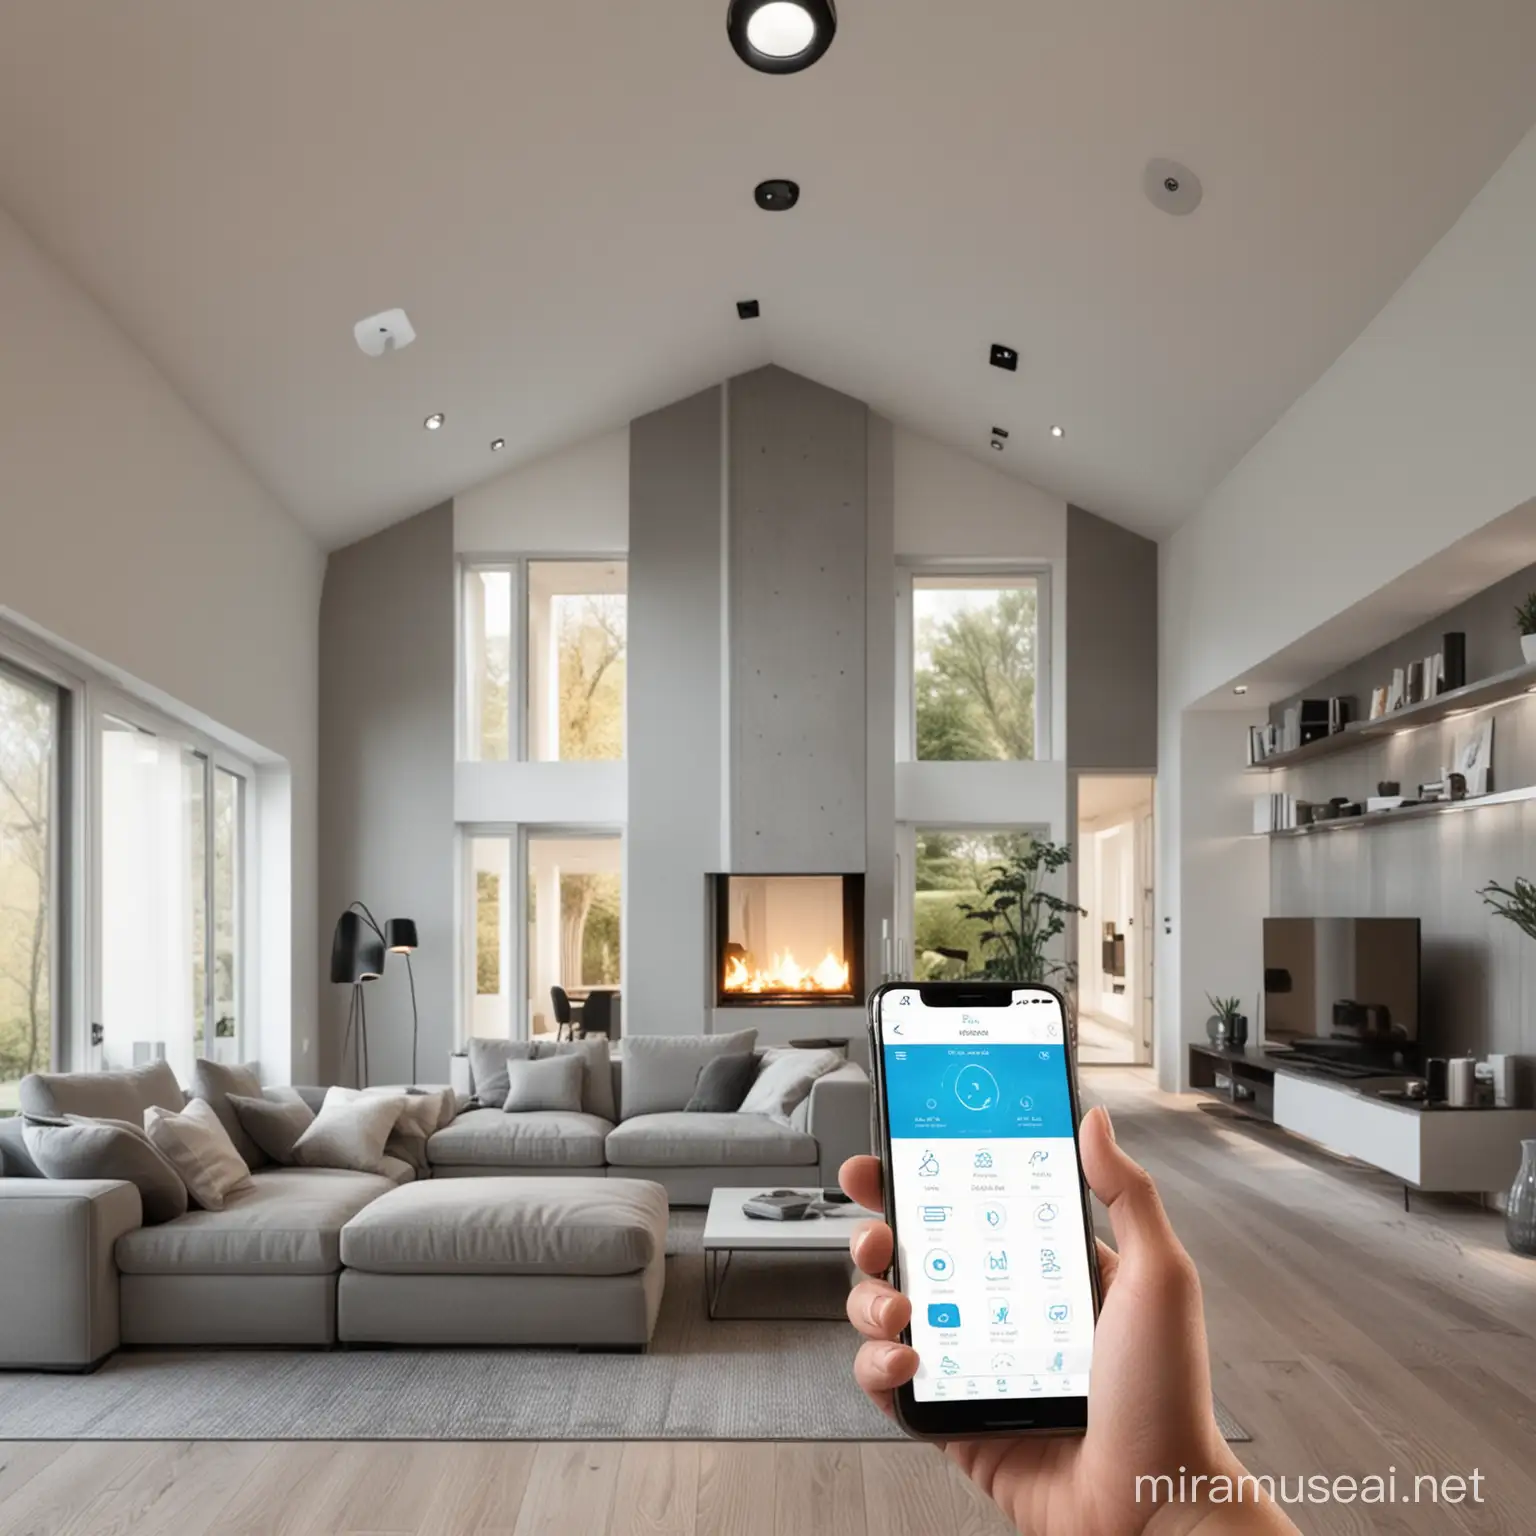 Futuristic Smart Home Interior with AI Integration